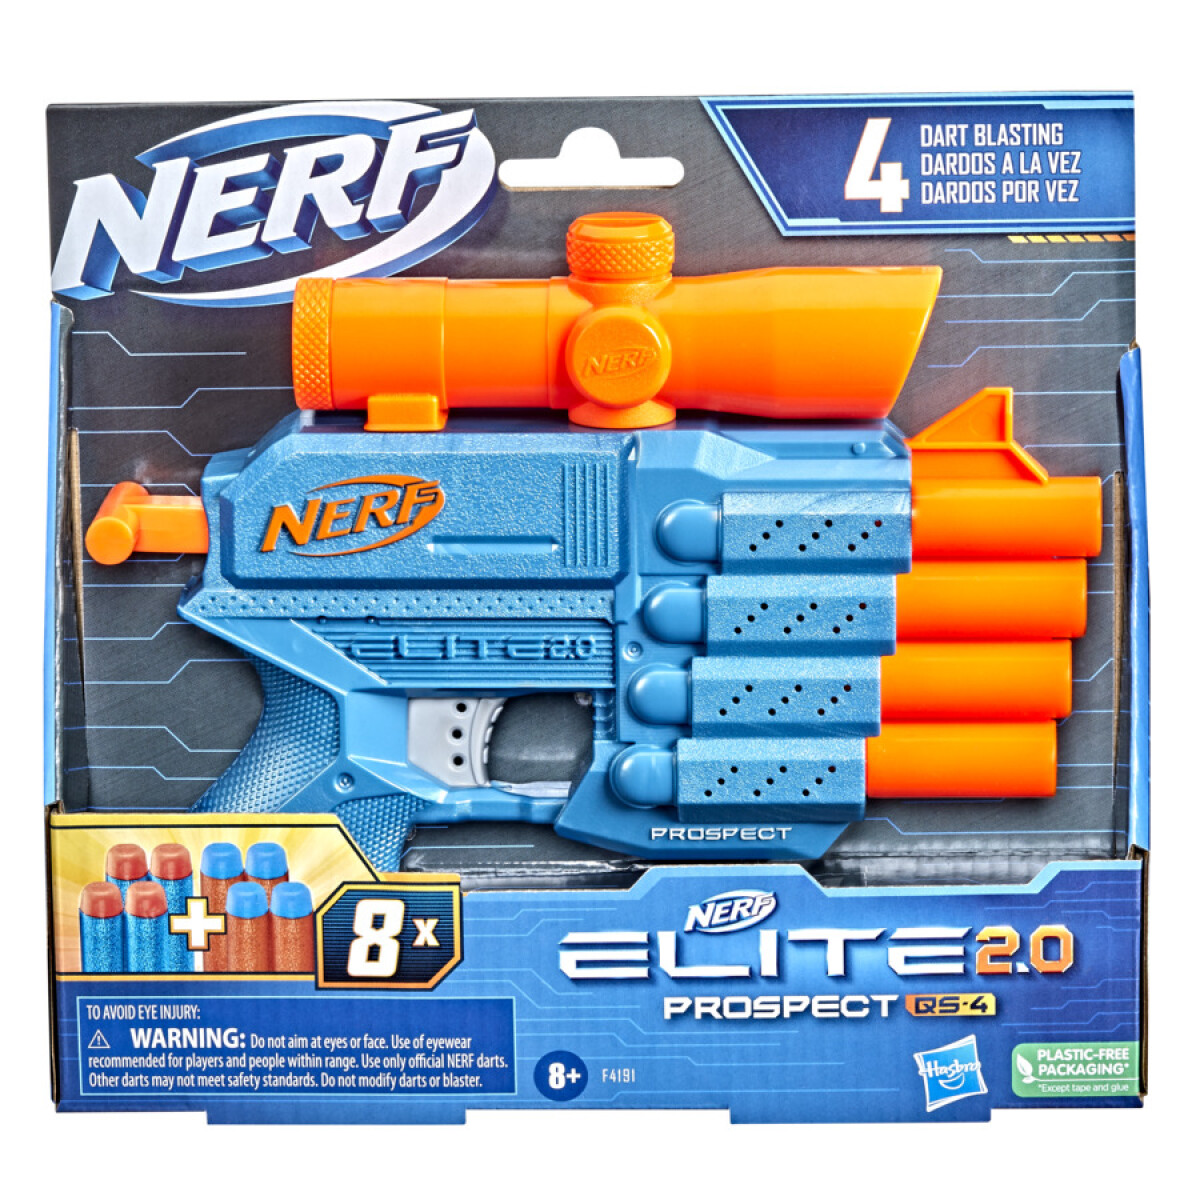 Pistola Nerf Elite 2.0 Prospect Qs 4 - 001 